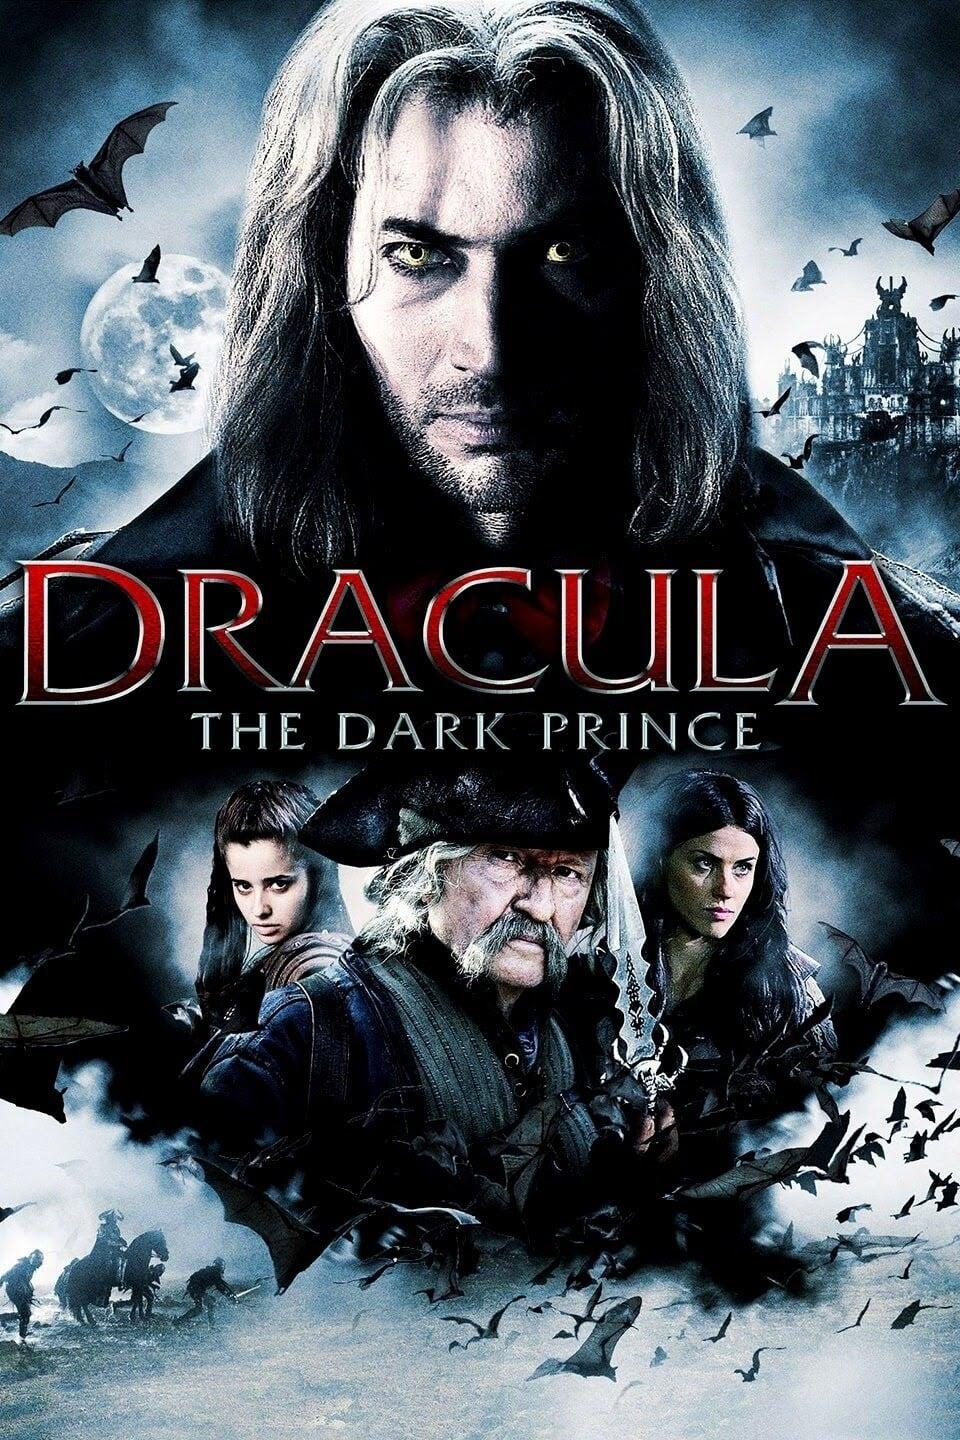 Dracula: The Dark Prince poster